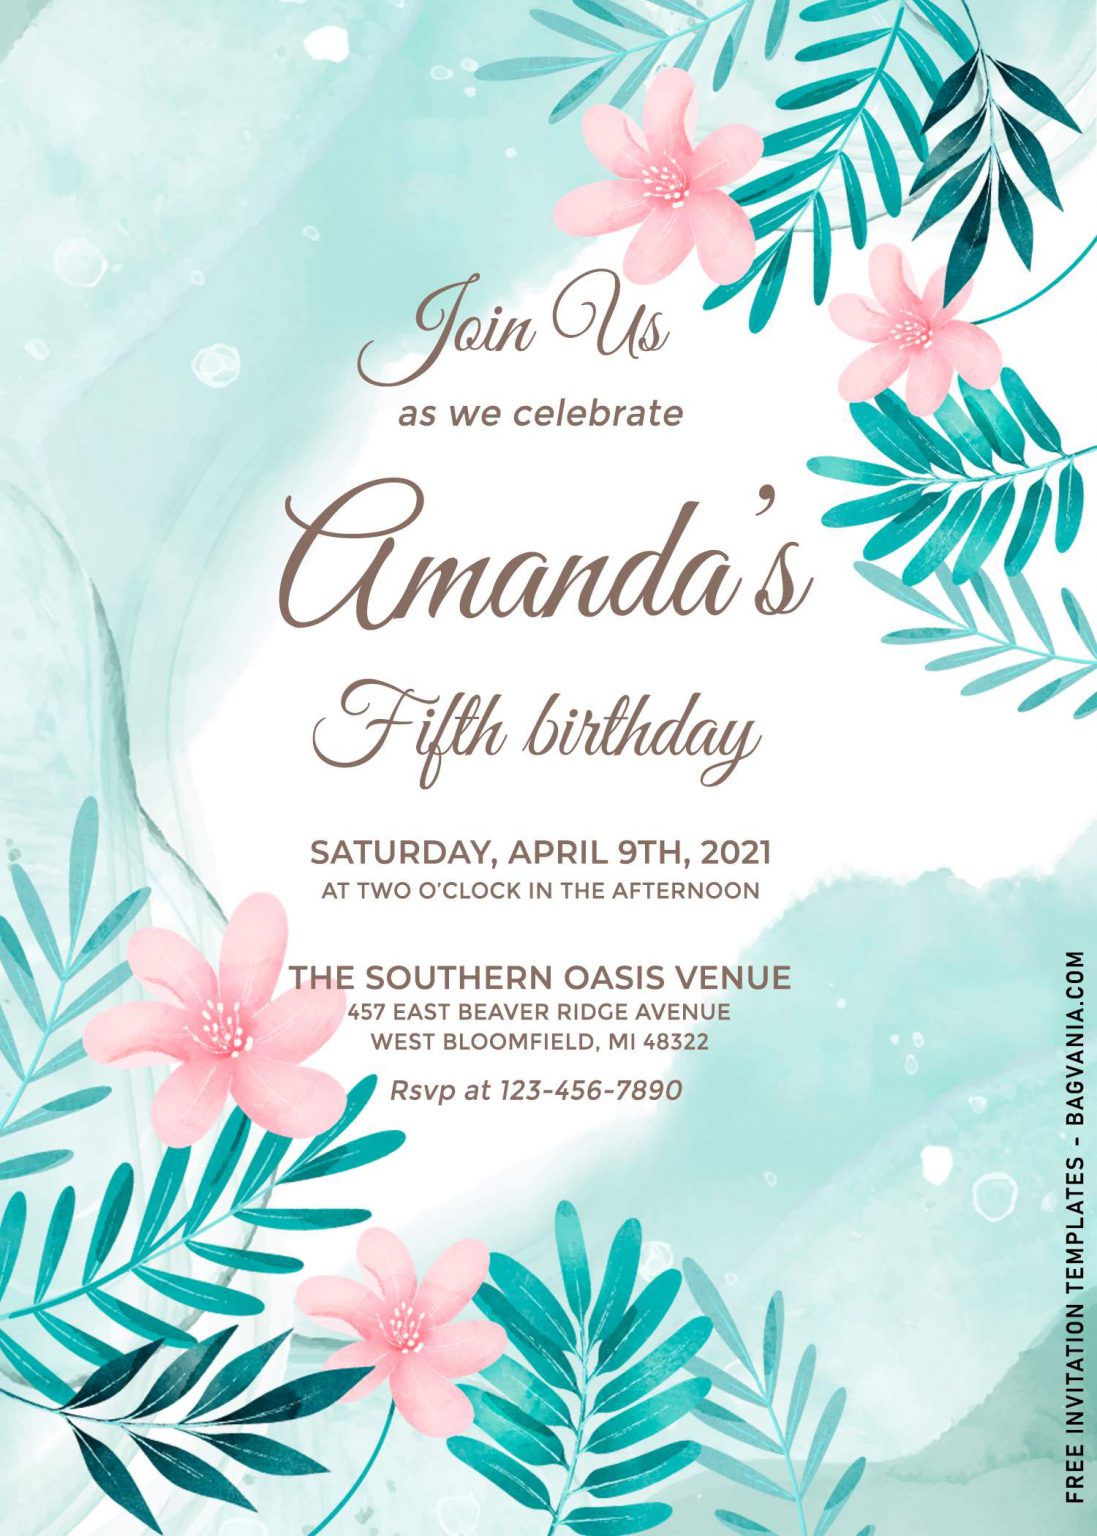 Birthday Invitation Format